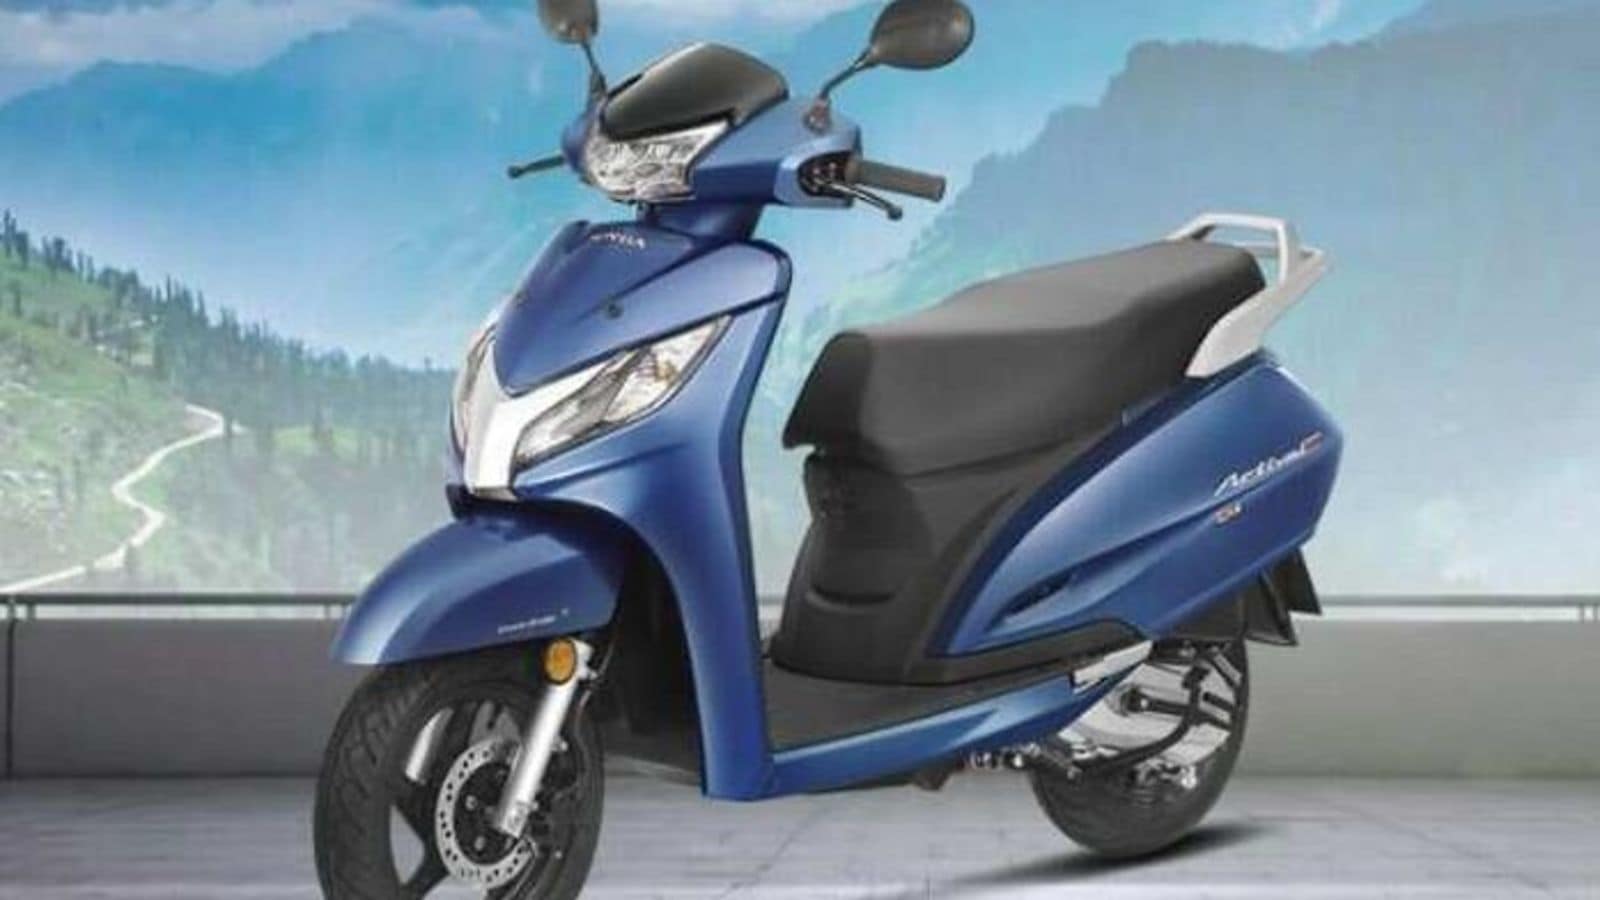 nyse Prisnedsættelse Pligt Honda Activa 125 scooter available with ₹5,000 cashback | HT Auto